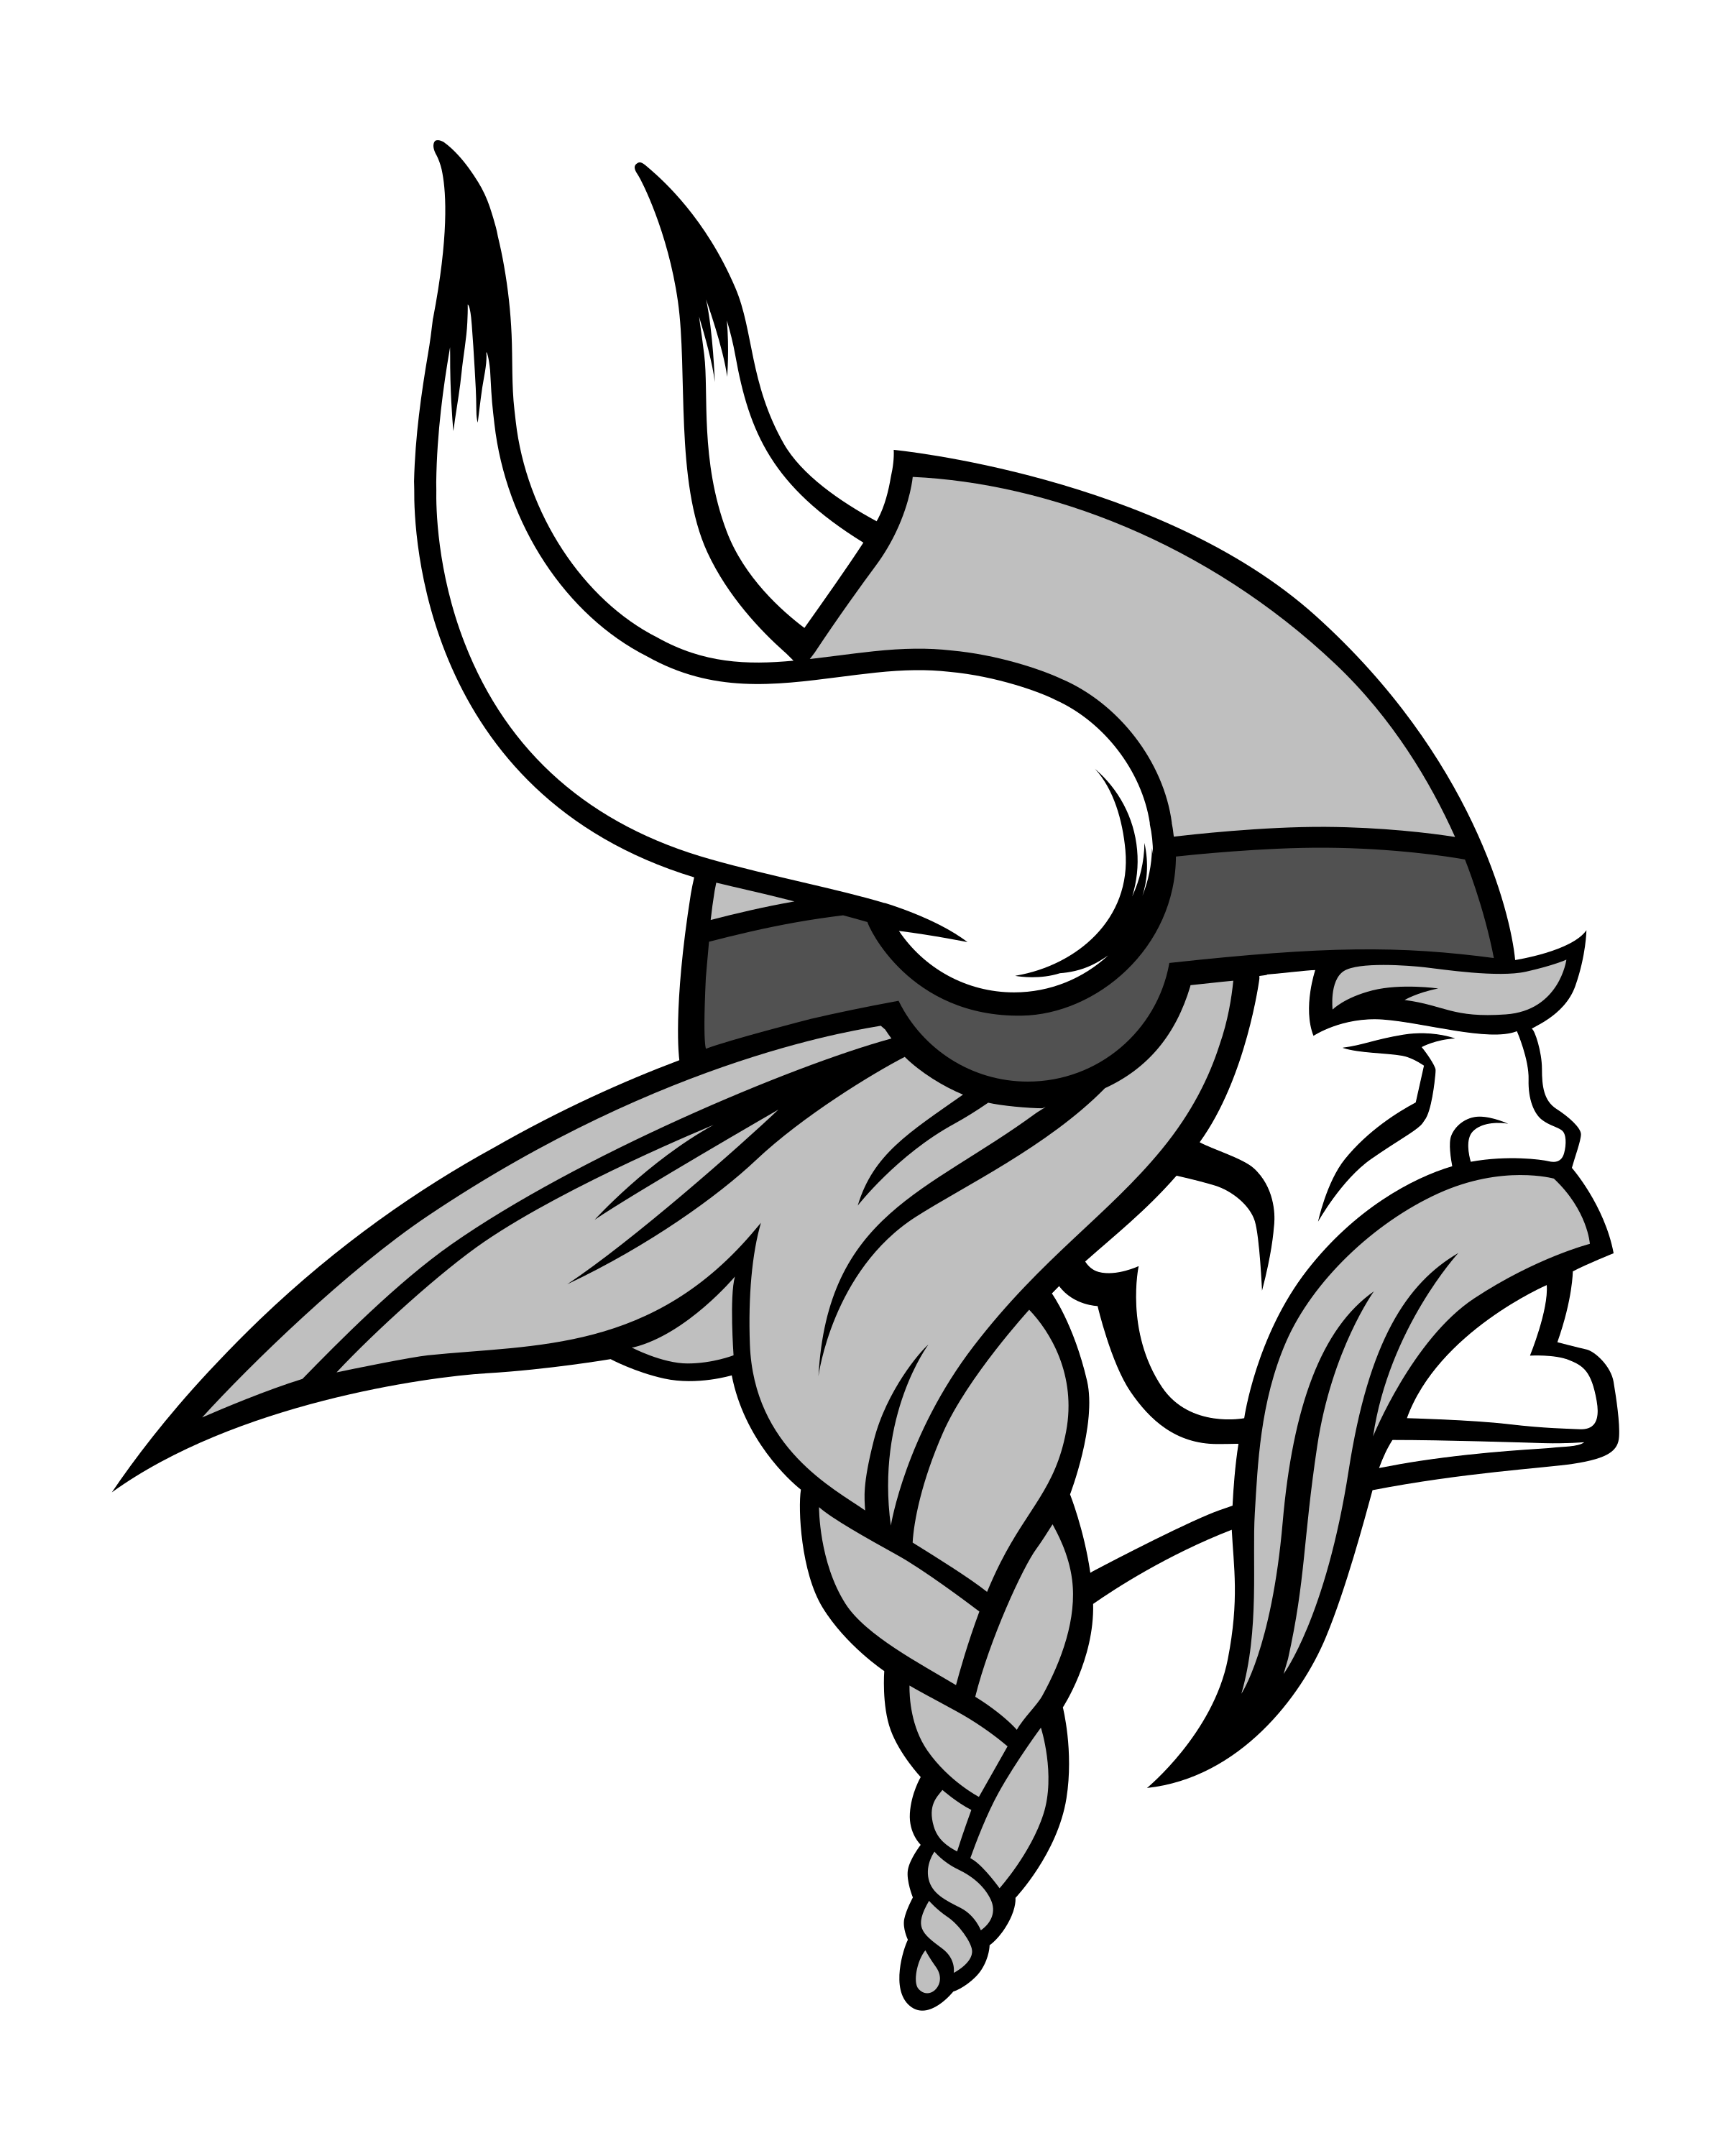 Minnesota Vikings Logo PNG Transparent & SVG Vector.